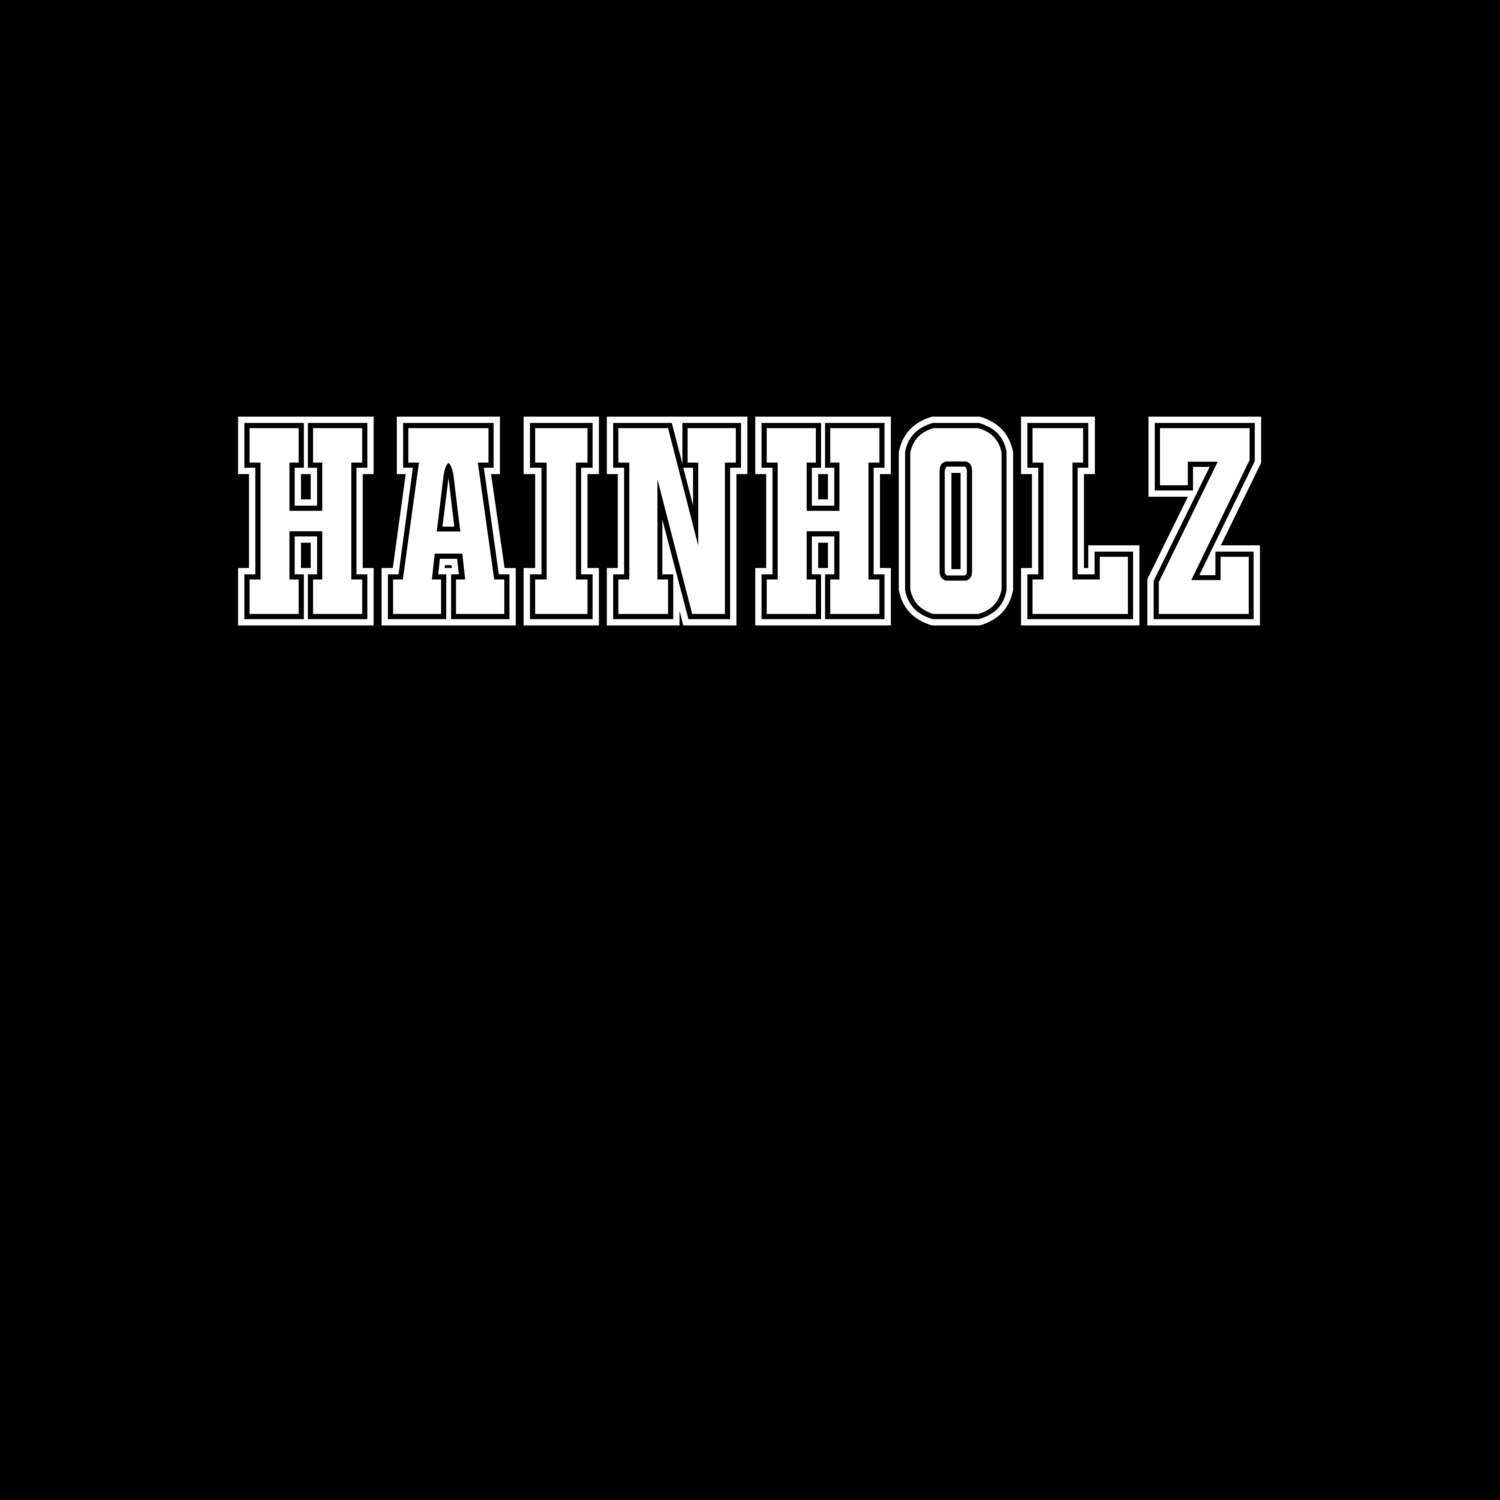 Hainholz T-Shirt »Classic«